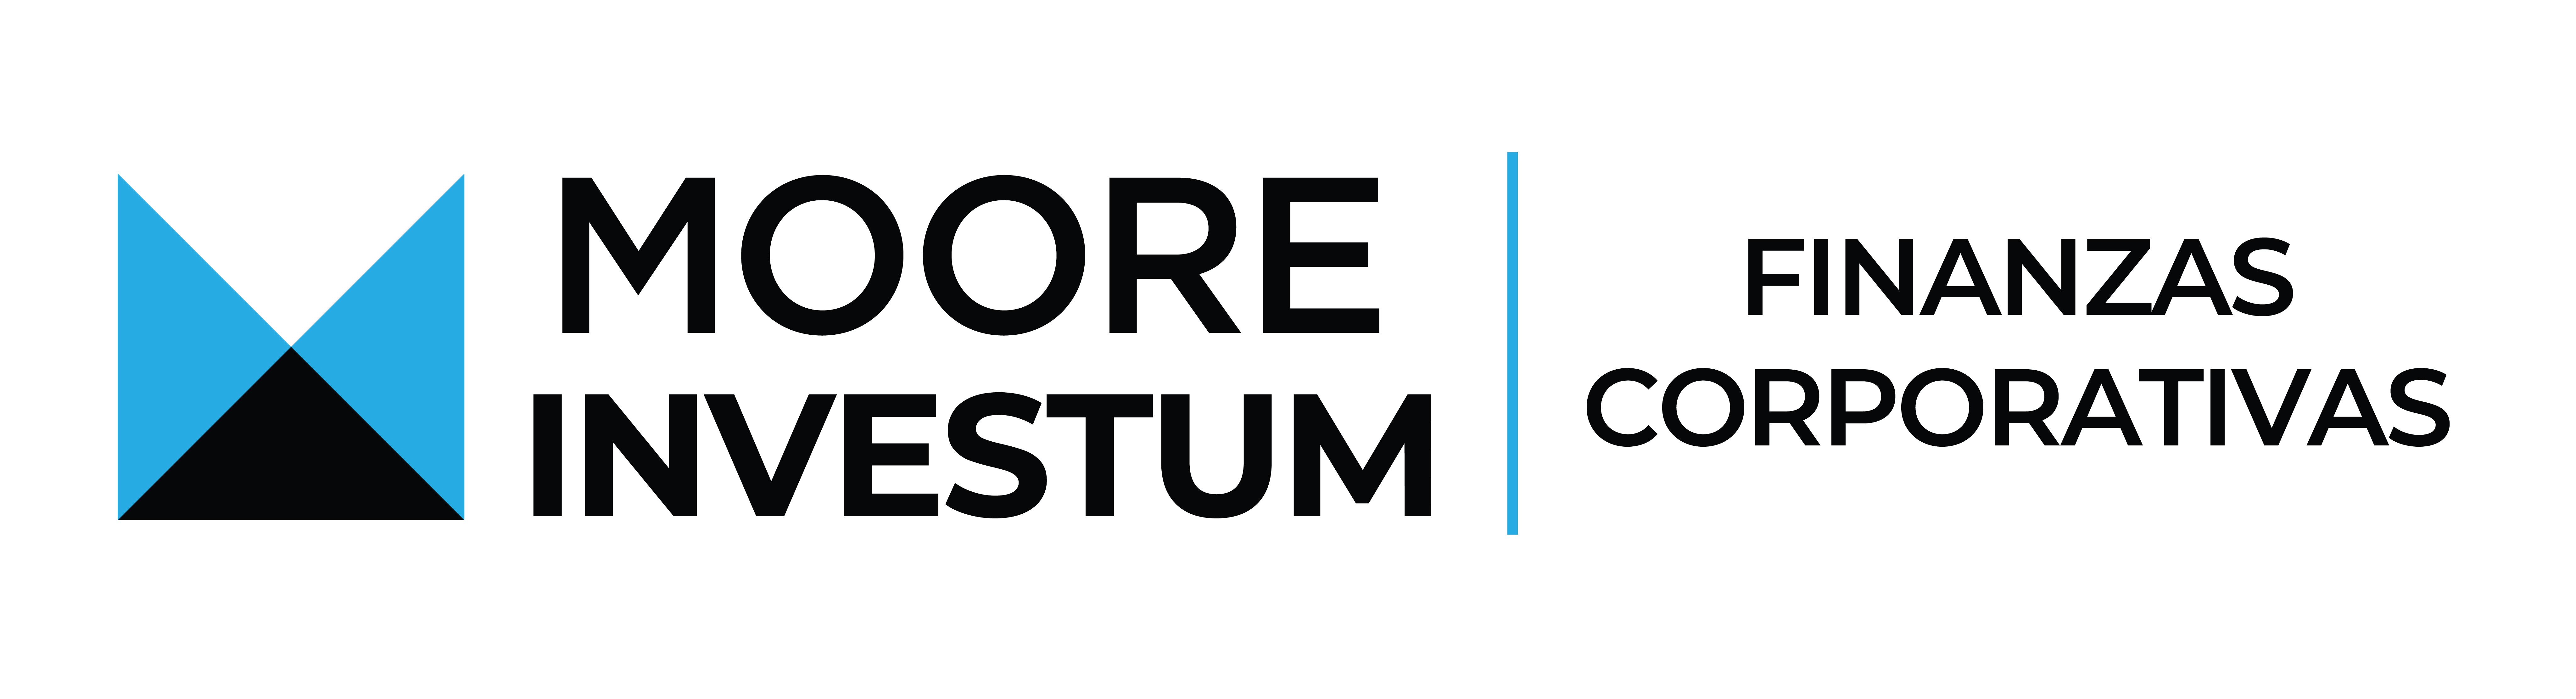 Logo-moore-investum-01-(1).png